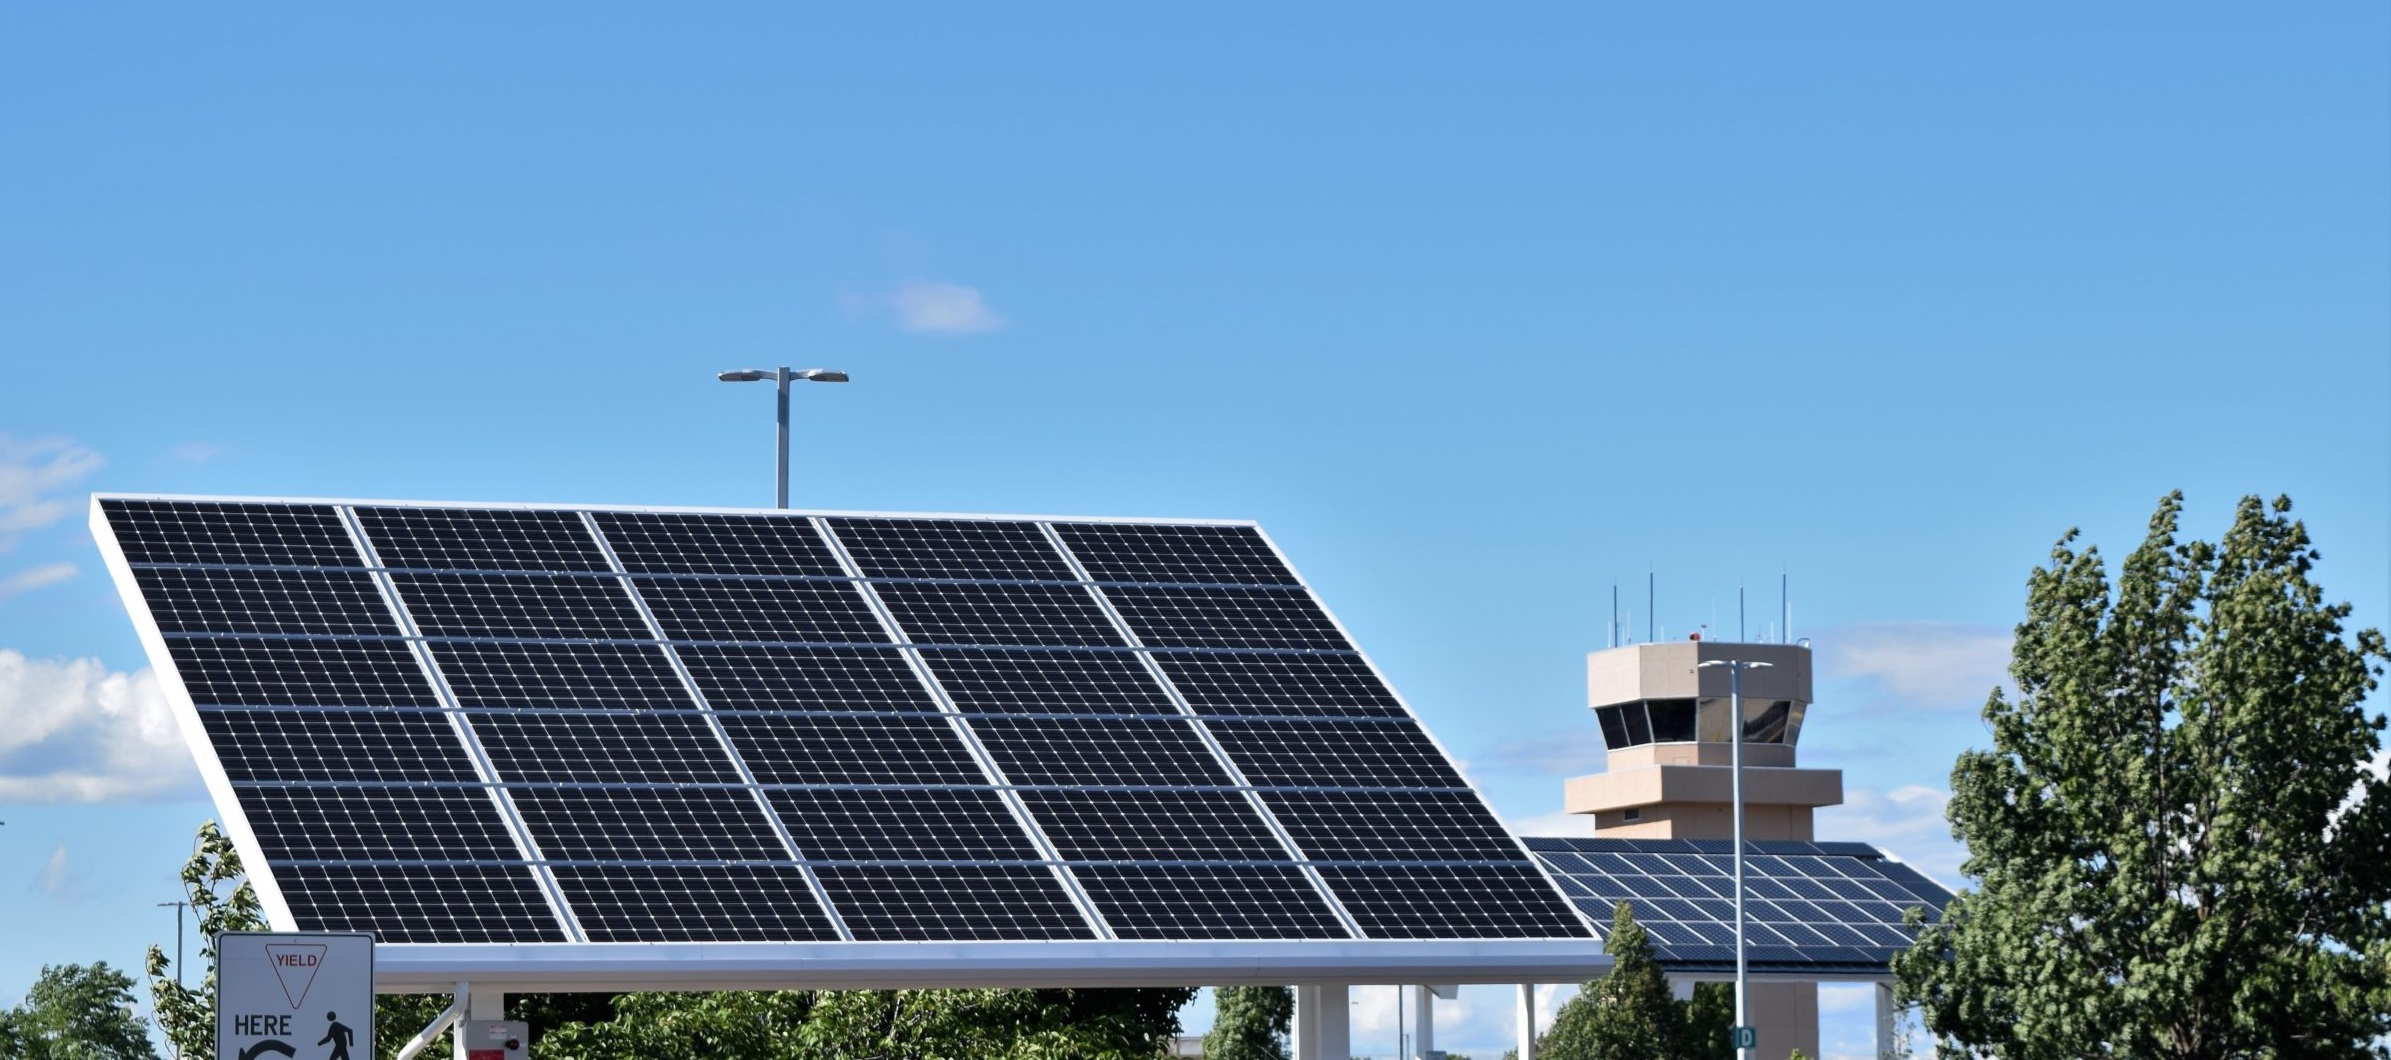 Solar Energy & Solar Panels Leads #6 - damianmartinez.com